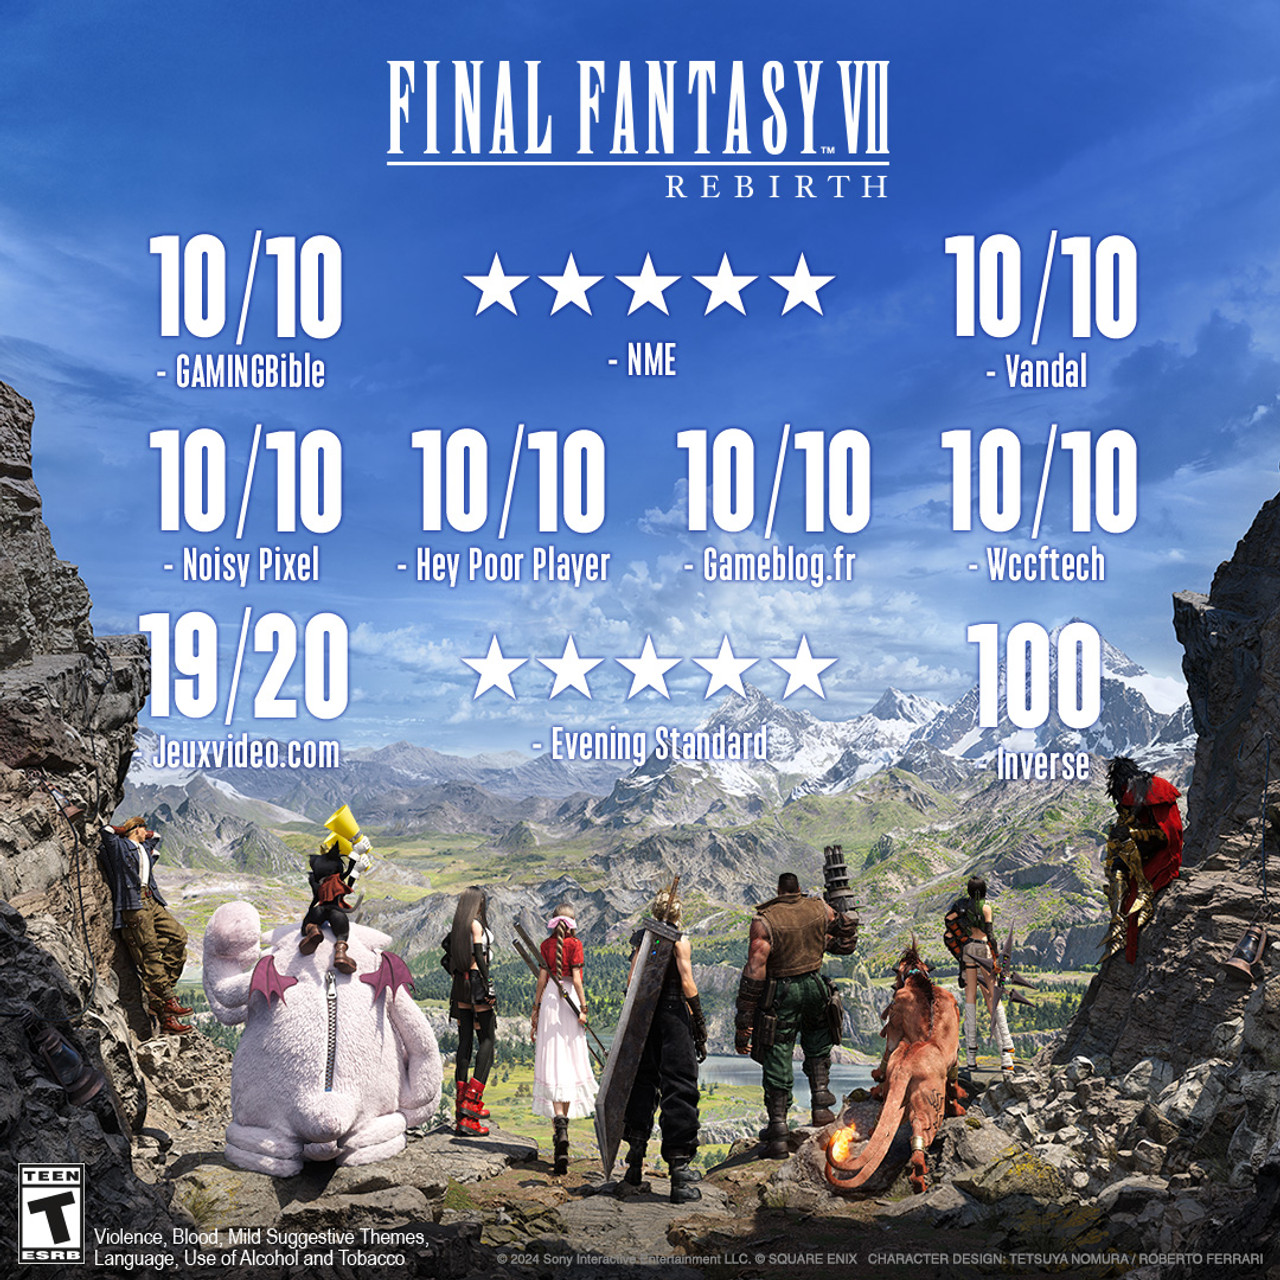 Купить Final Fantasy VII Rebirth Deluxe Edition (PS5) ПРЕДЗАКАЗ! в